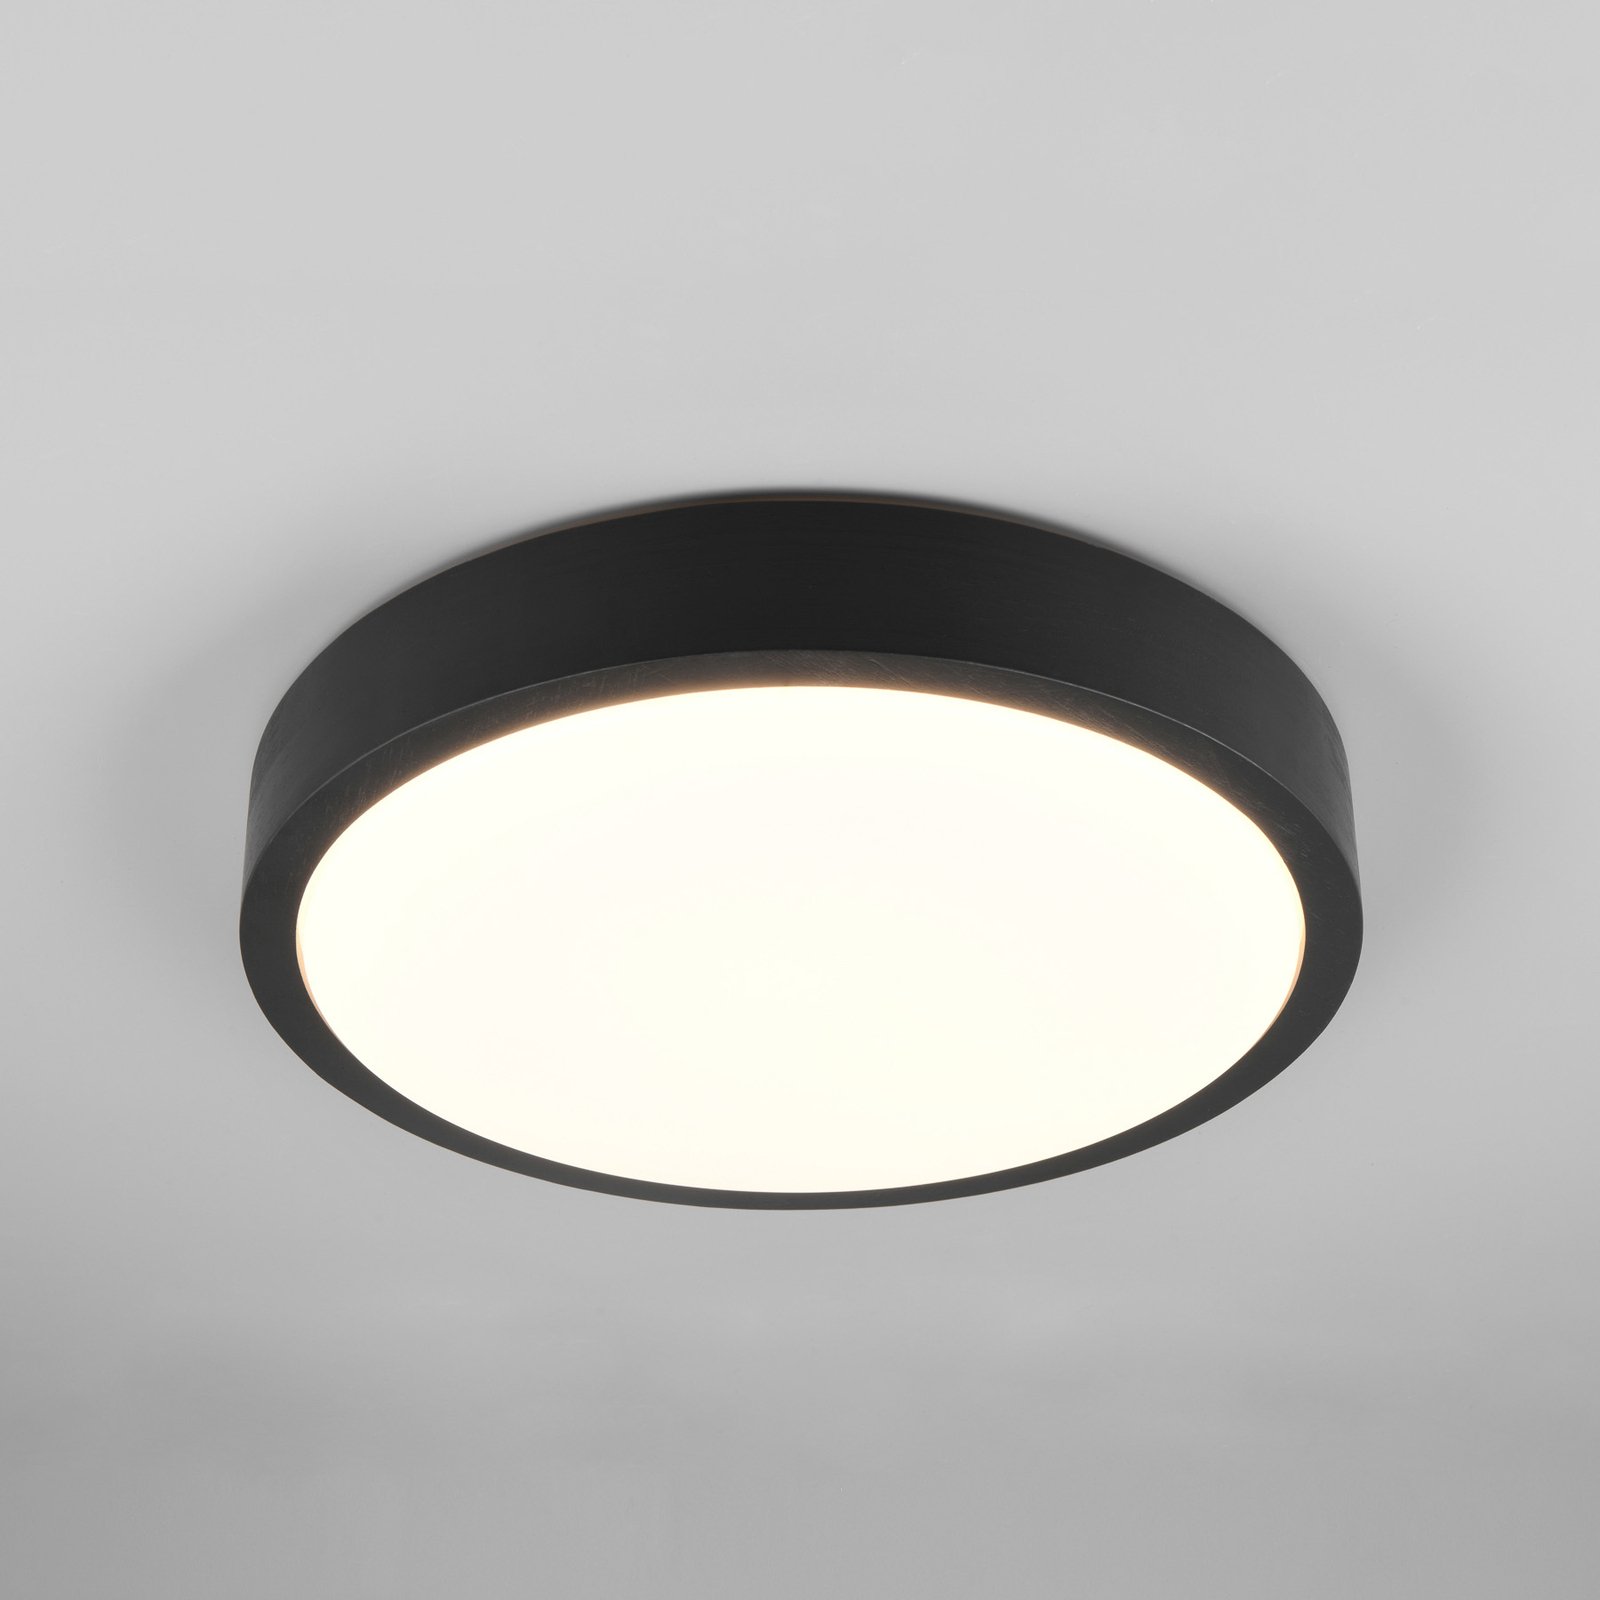 LED-Deckenleuchte Iseo, schwarz, Ø 40 cm, dimmbar, Holz